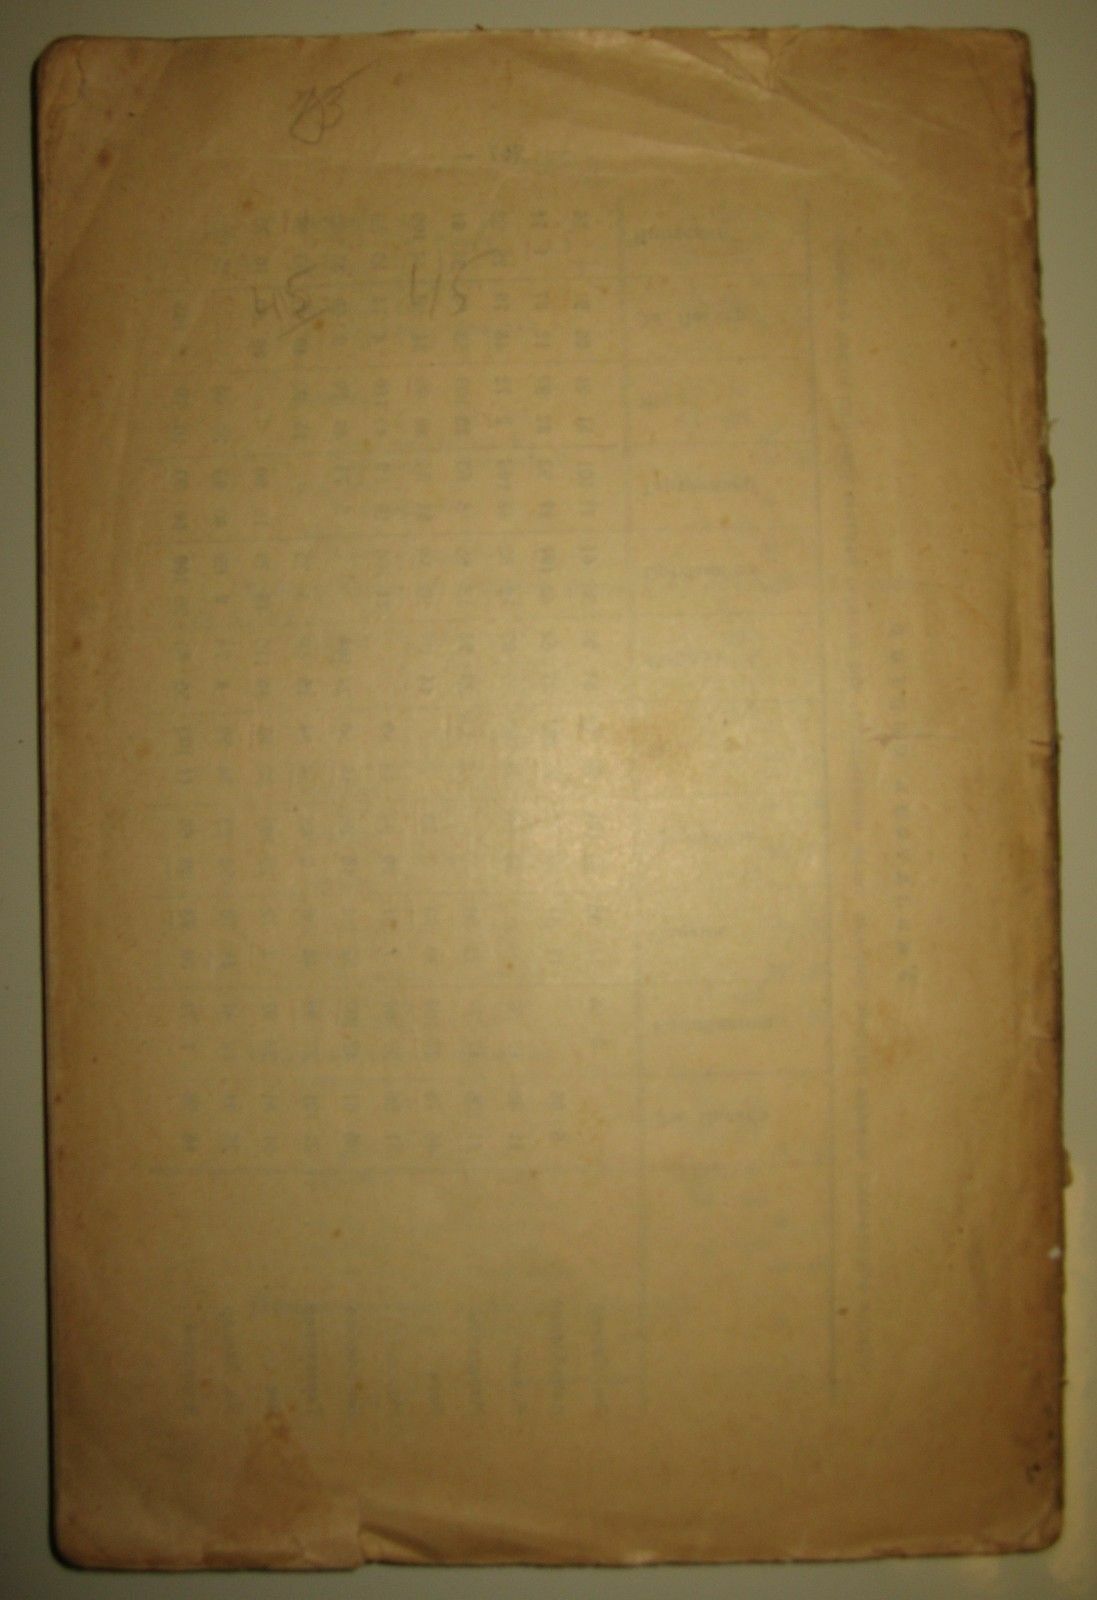 11072.Chess Book: Grekov, Nenarokov. International Chess Tournament in New York 1924